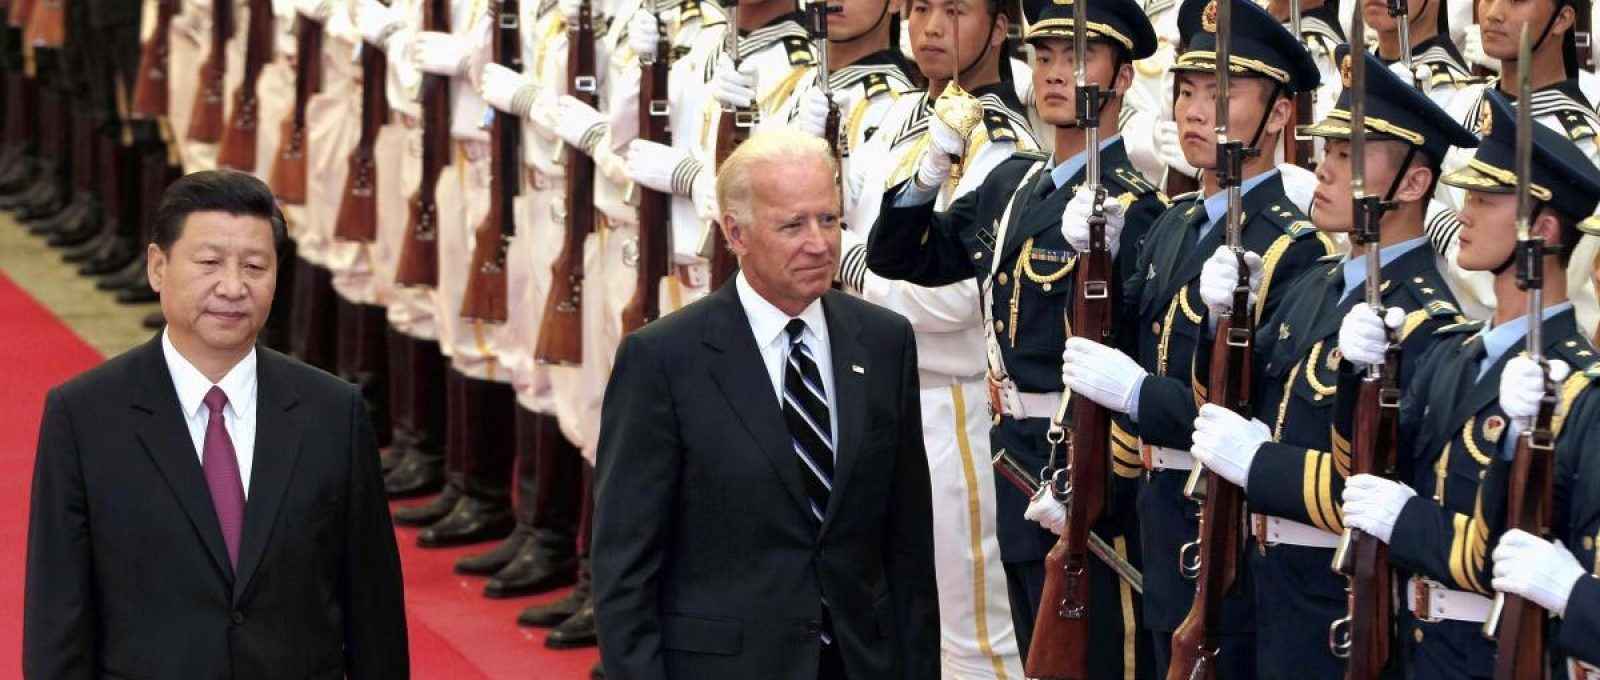 Xi Jinping Joe Biden, então vice-presidentes, em Pequim, agosto de 2011 (Foto: Lintao Zhang/Reuters).